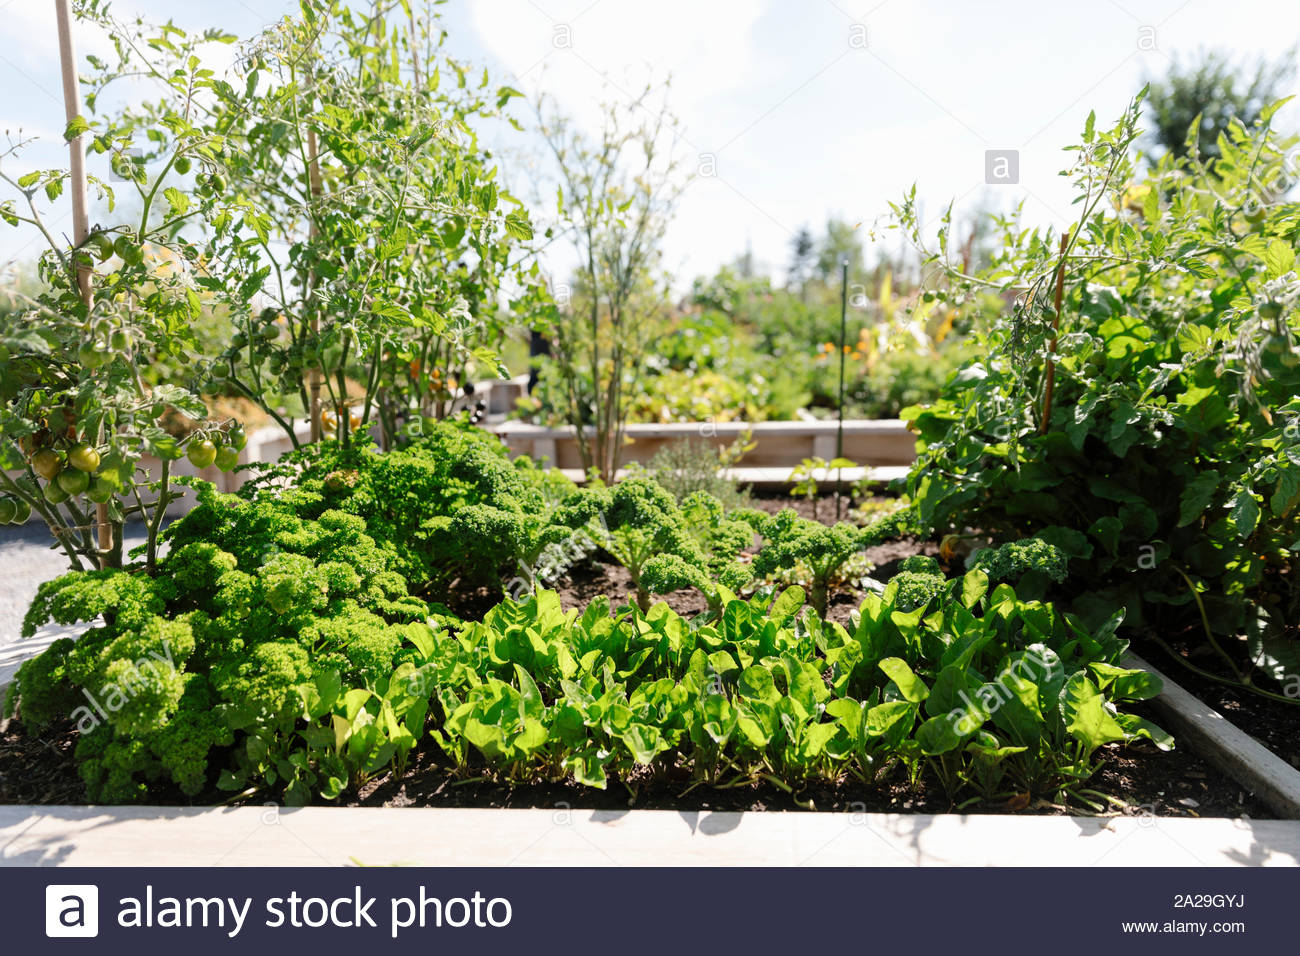 Green vegetable plants growing in sunny community garden Stock Photo